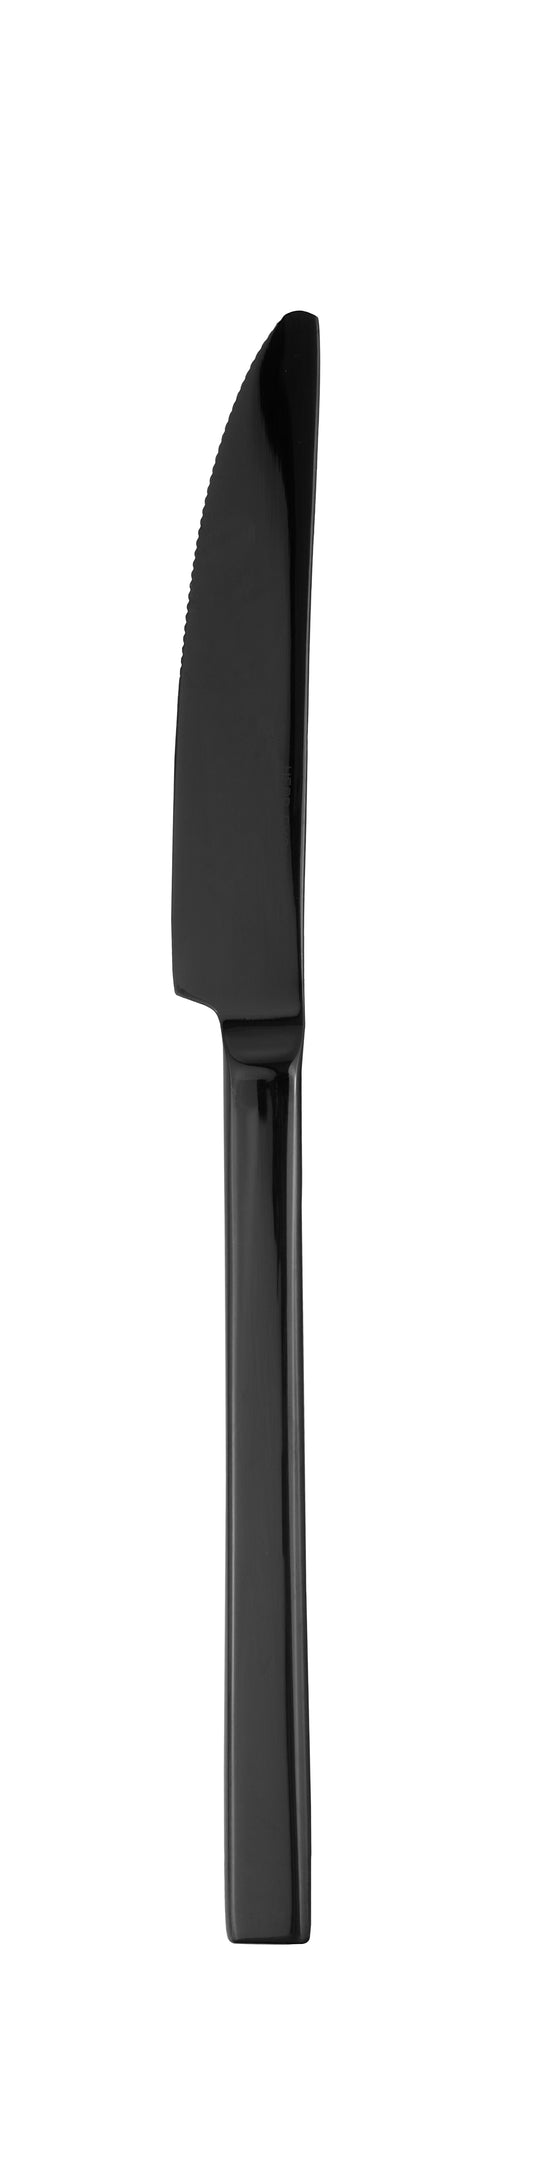 Table knife MB PROFILE PVD black 230mm